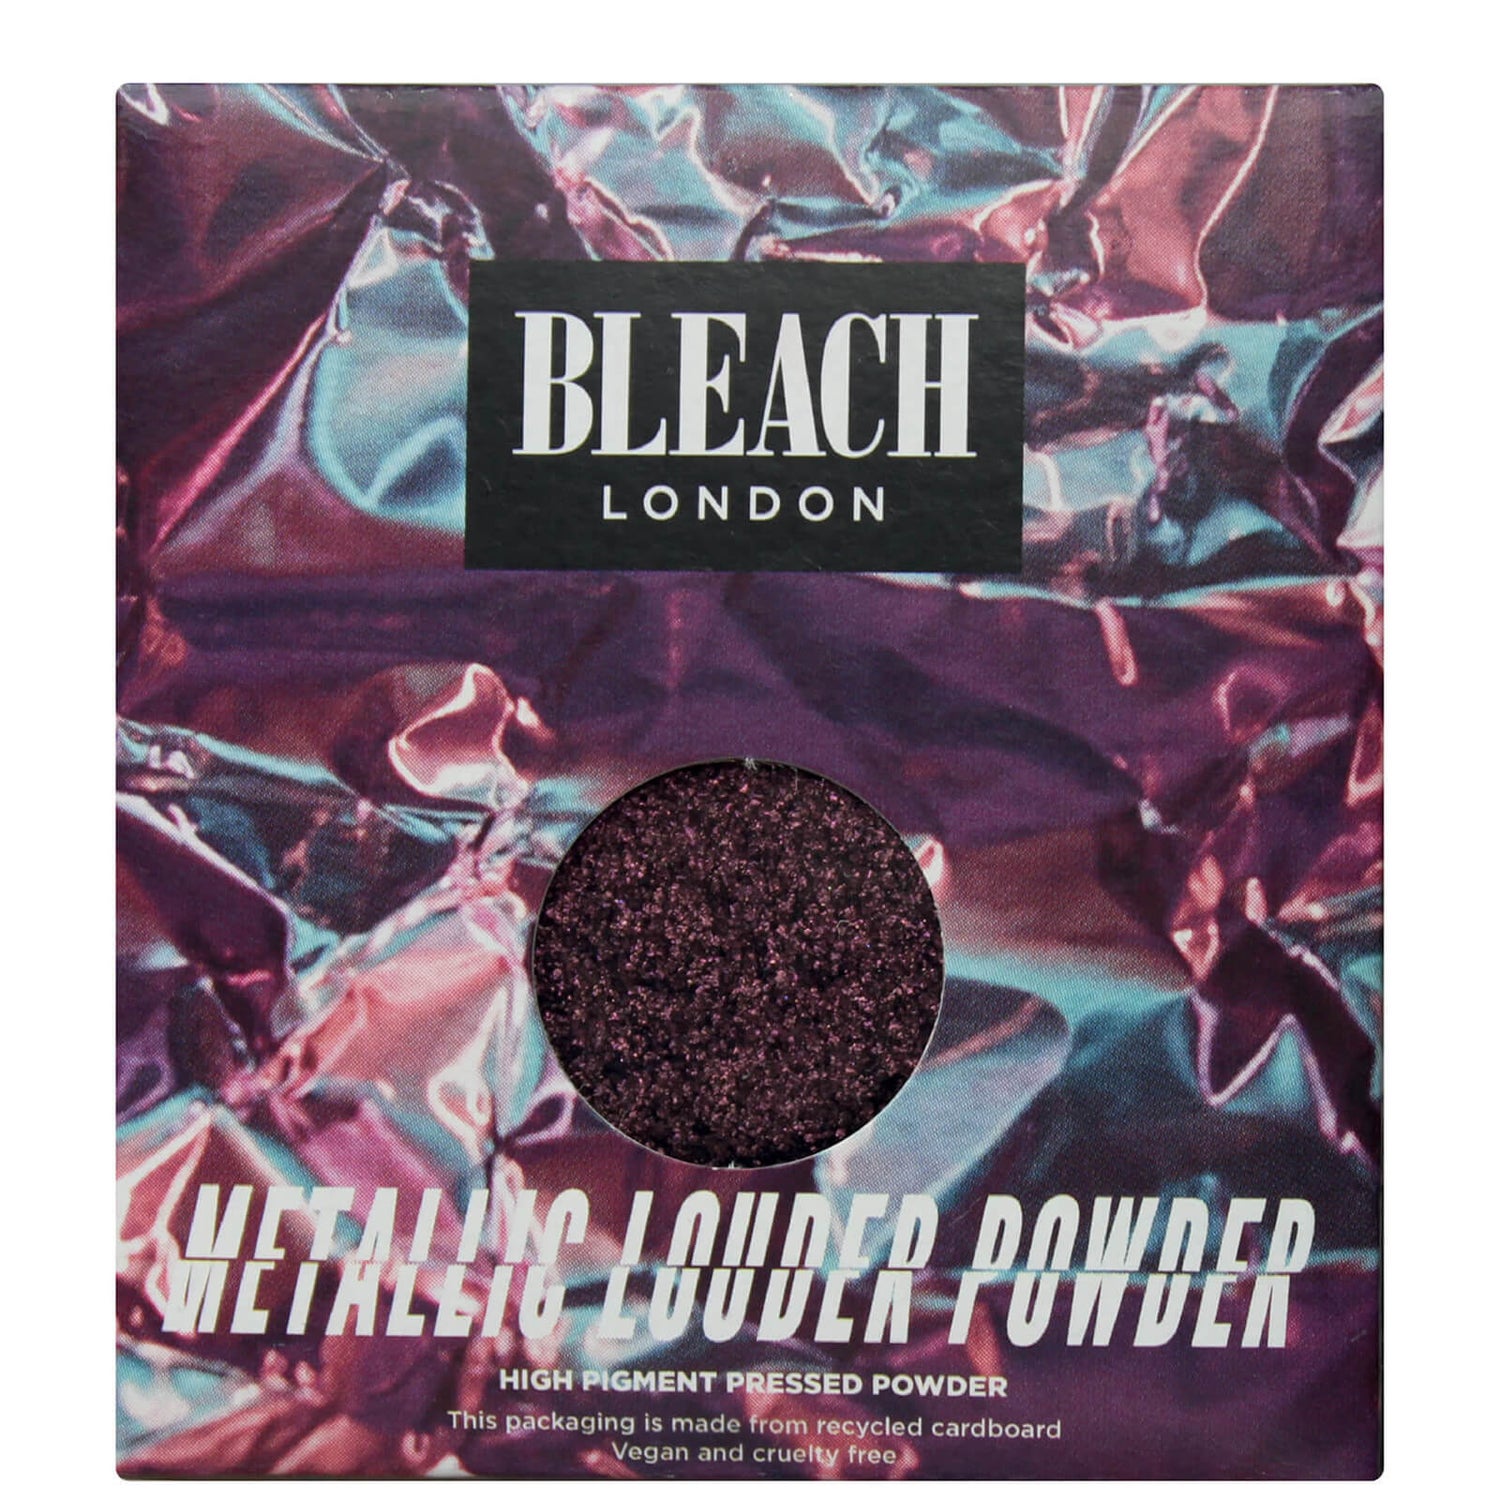 Sombra de ojos Metallic Louder Powder Bv 5 Me de BLEACH LONDON